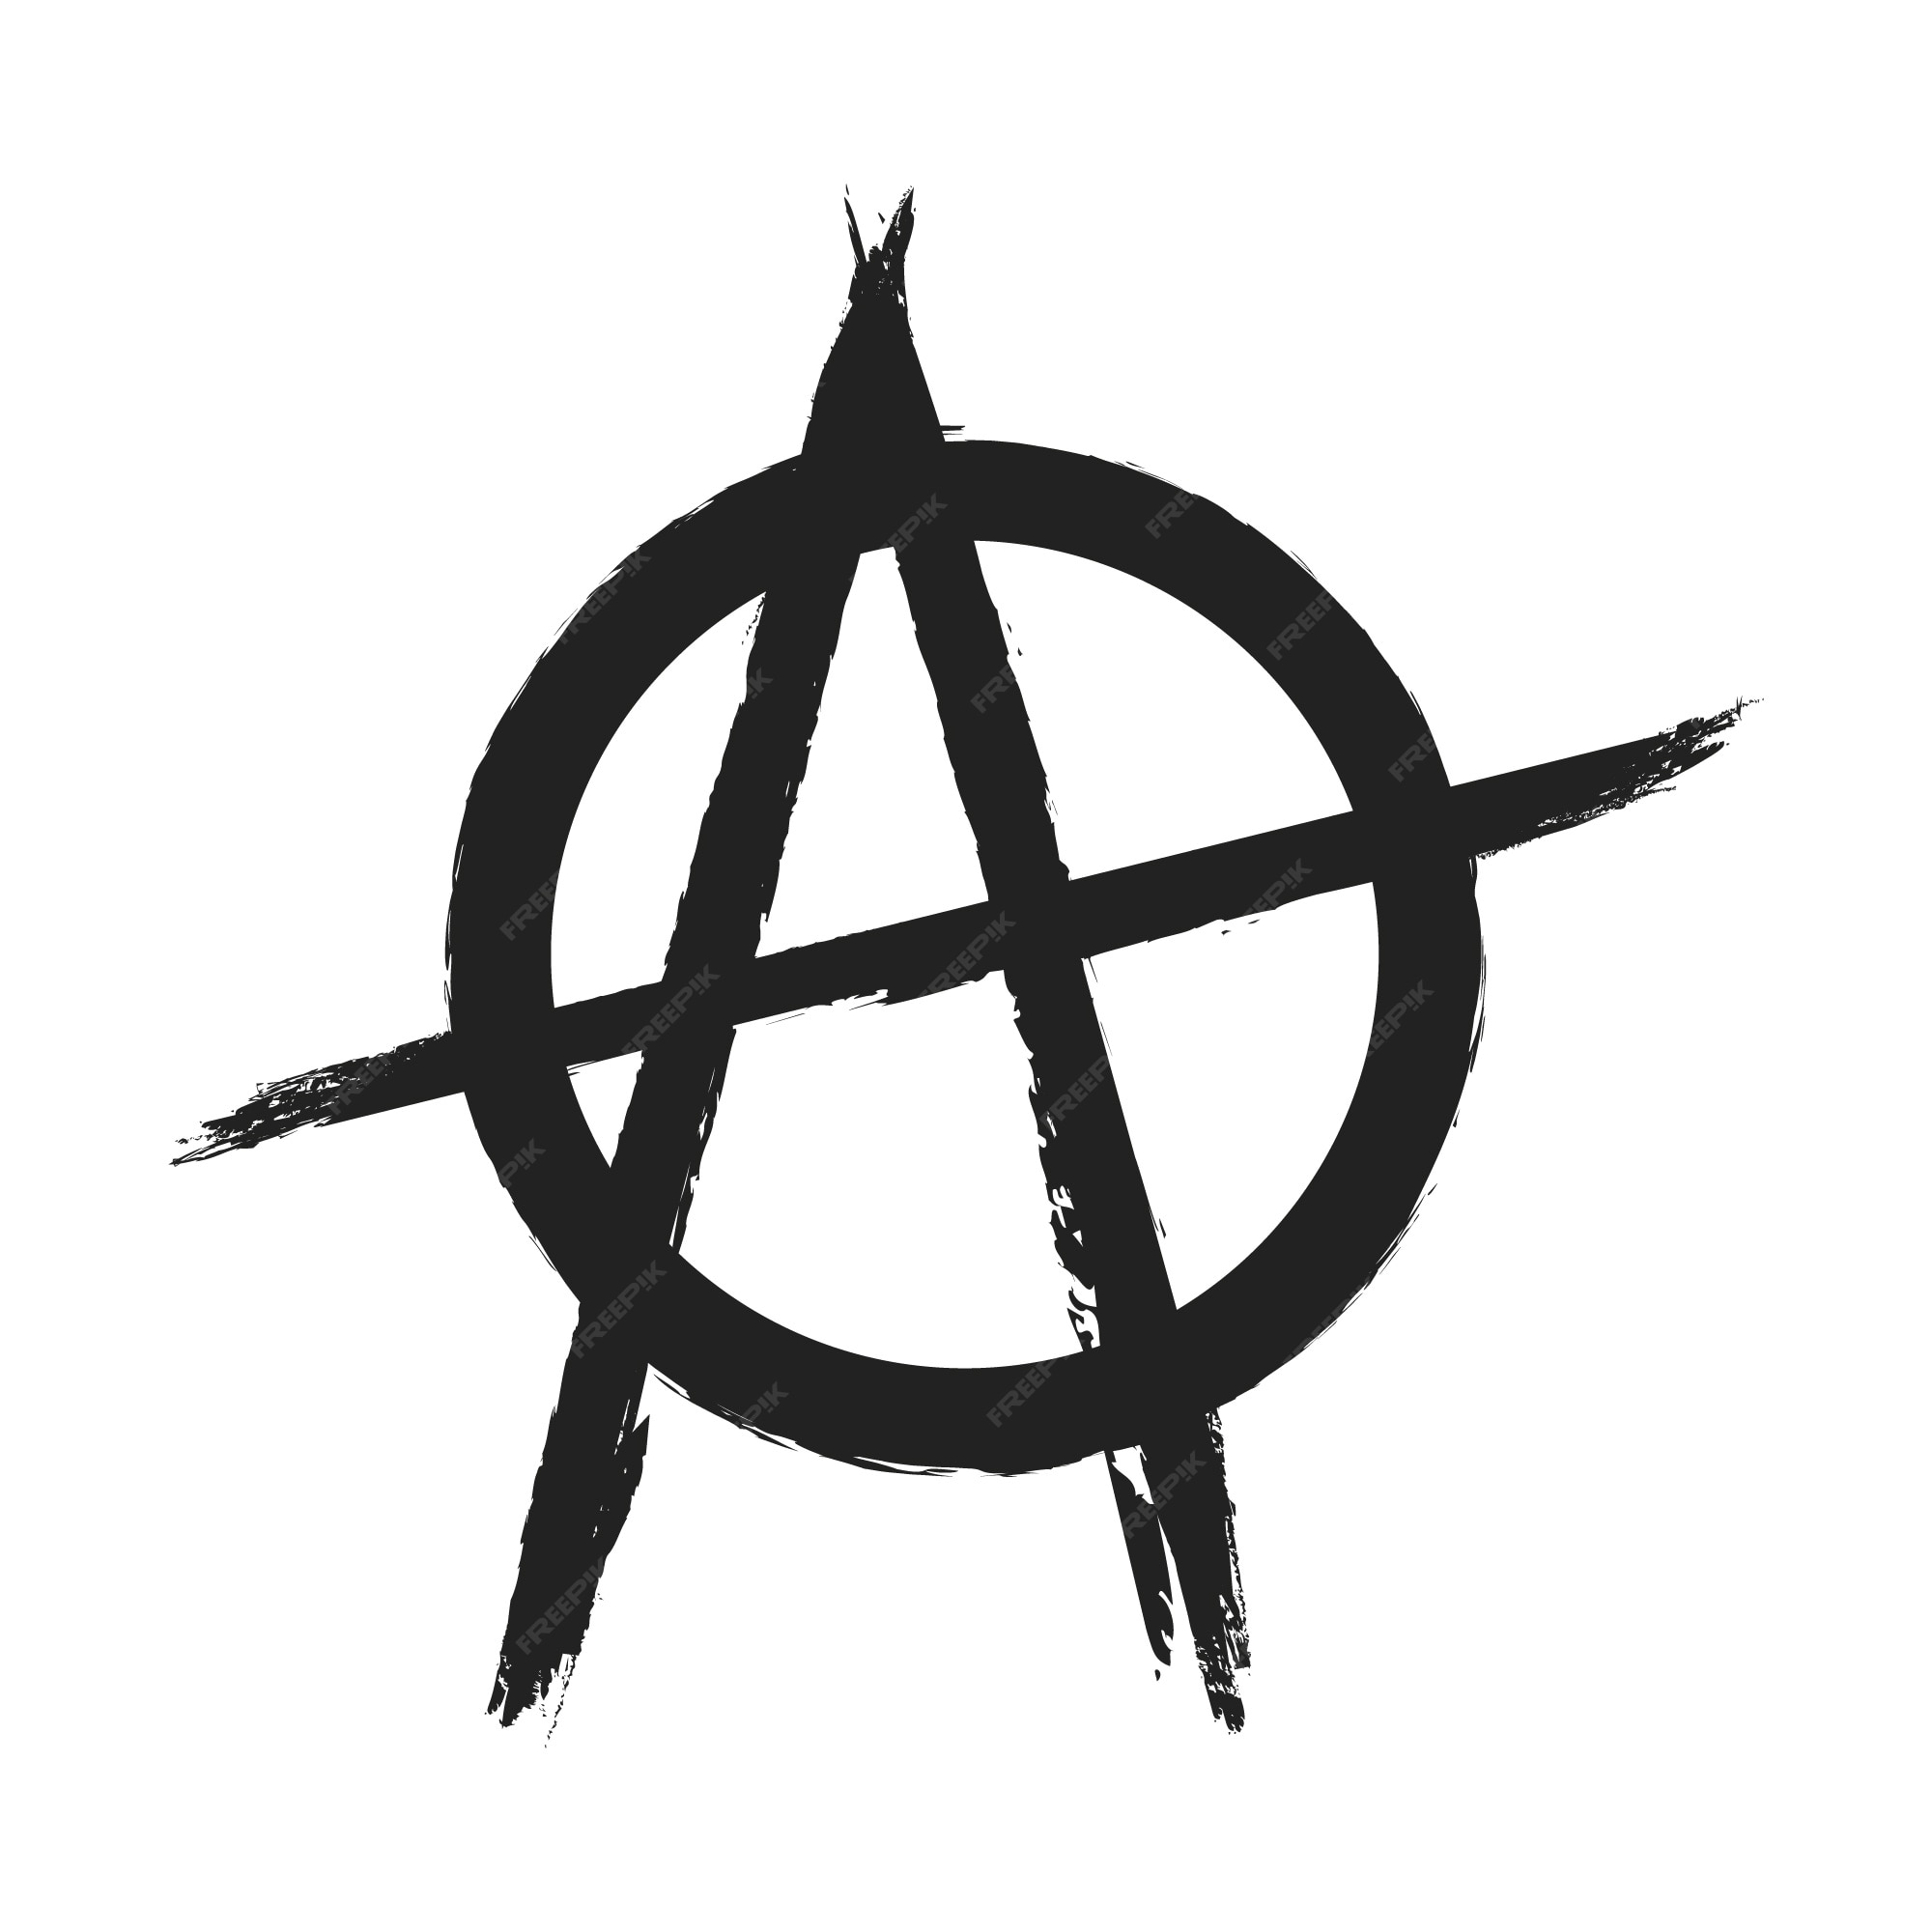 Anarchy Symbol Images | Free Vectors, Stock Photos  PSD